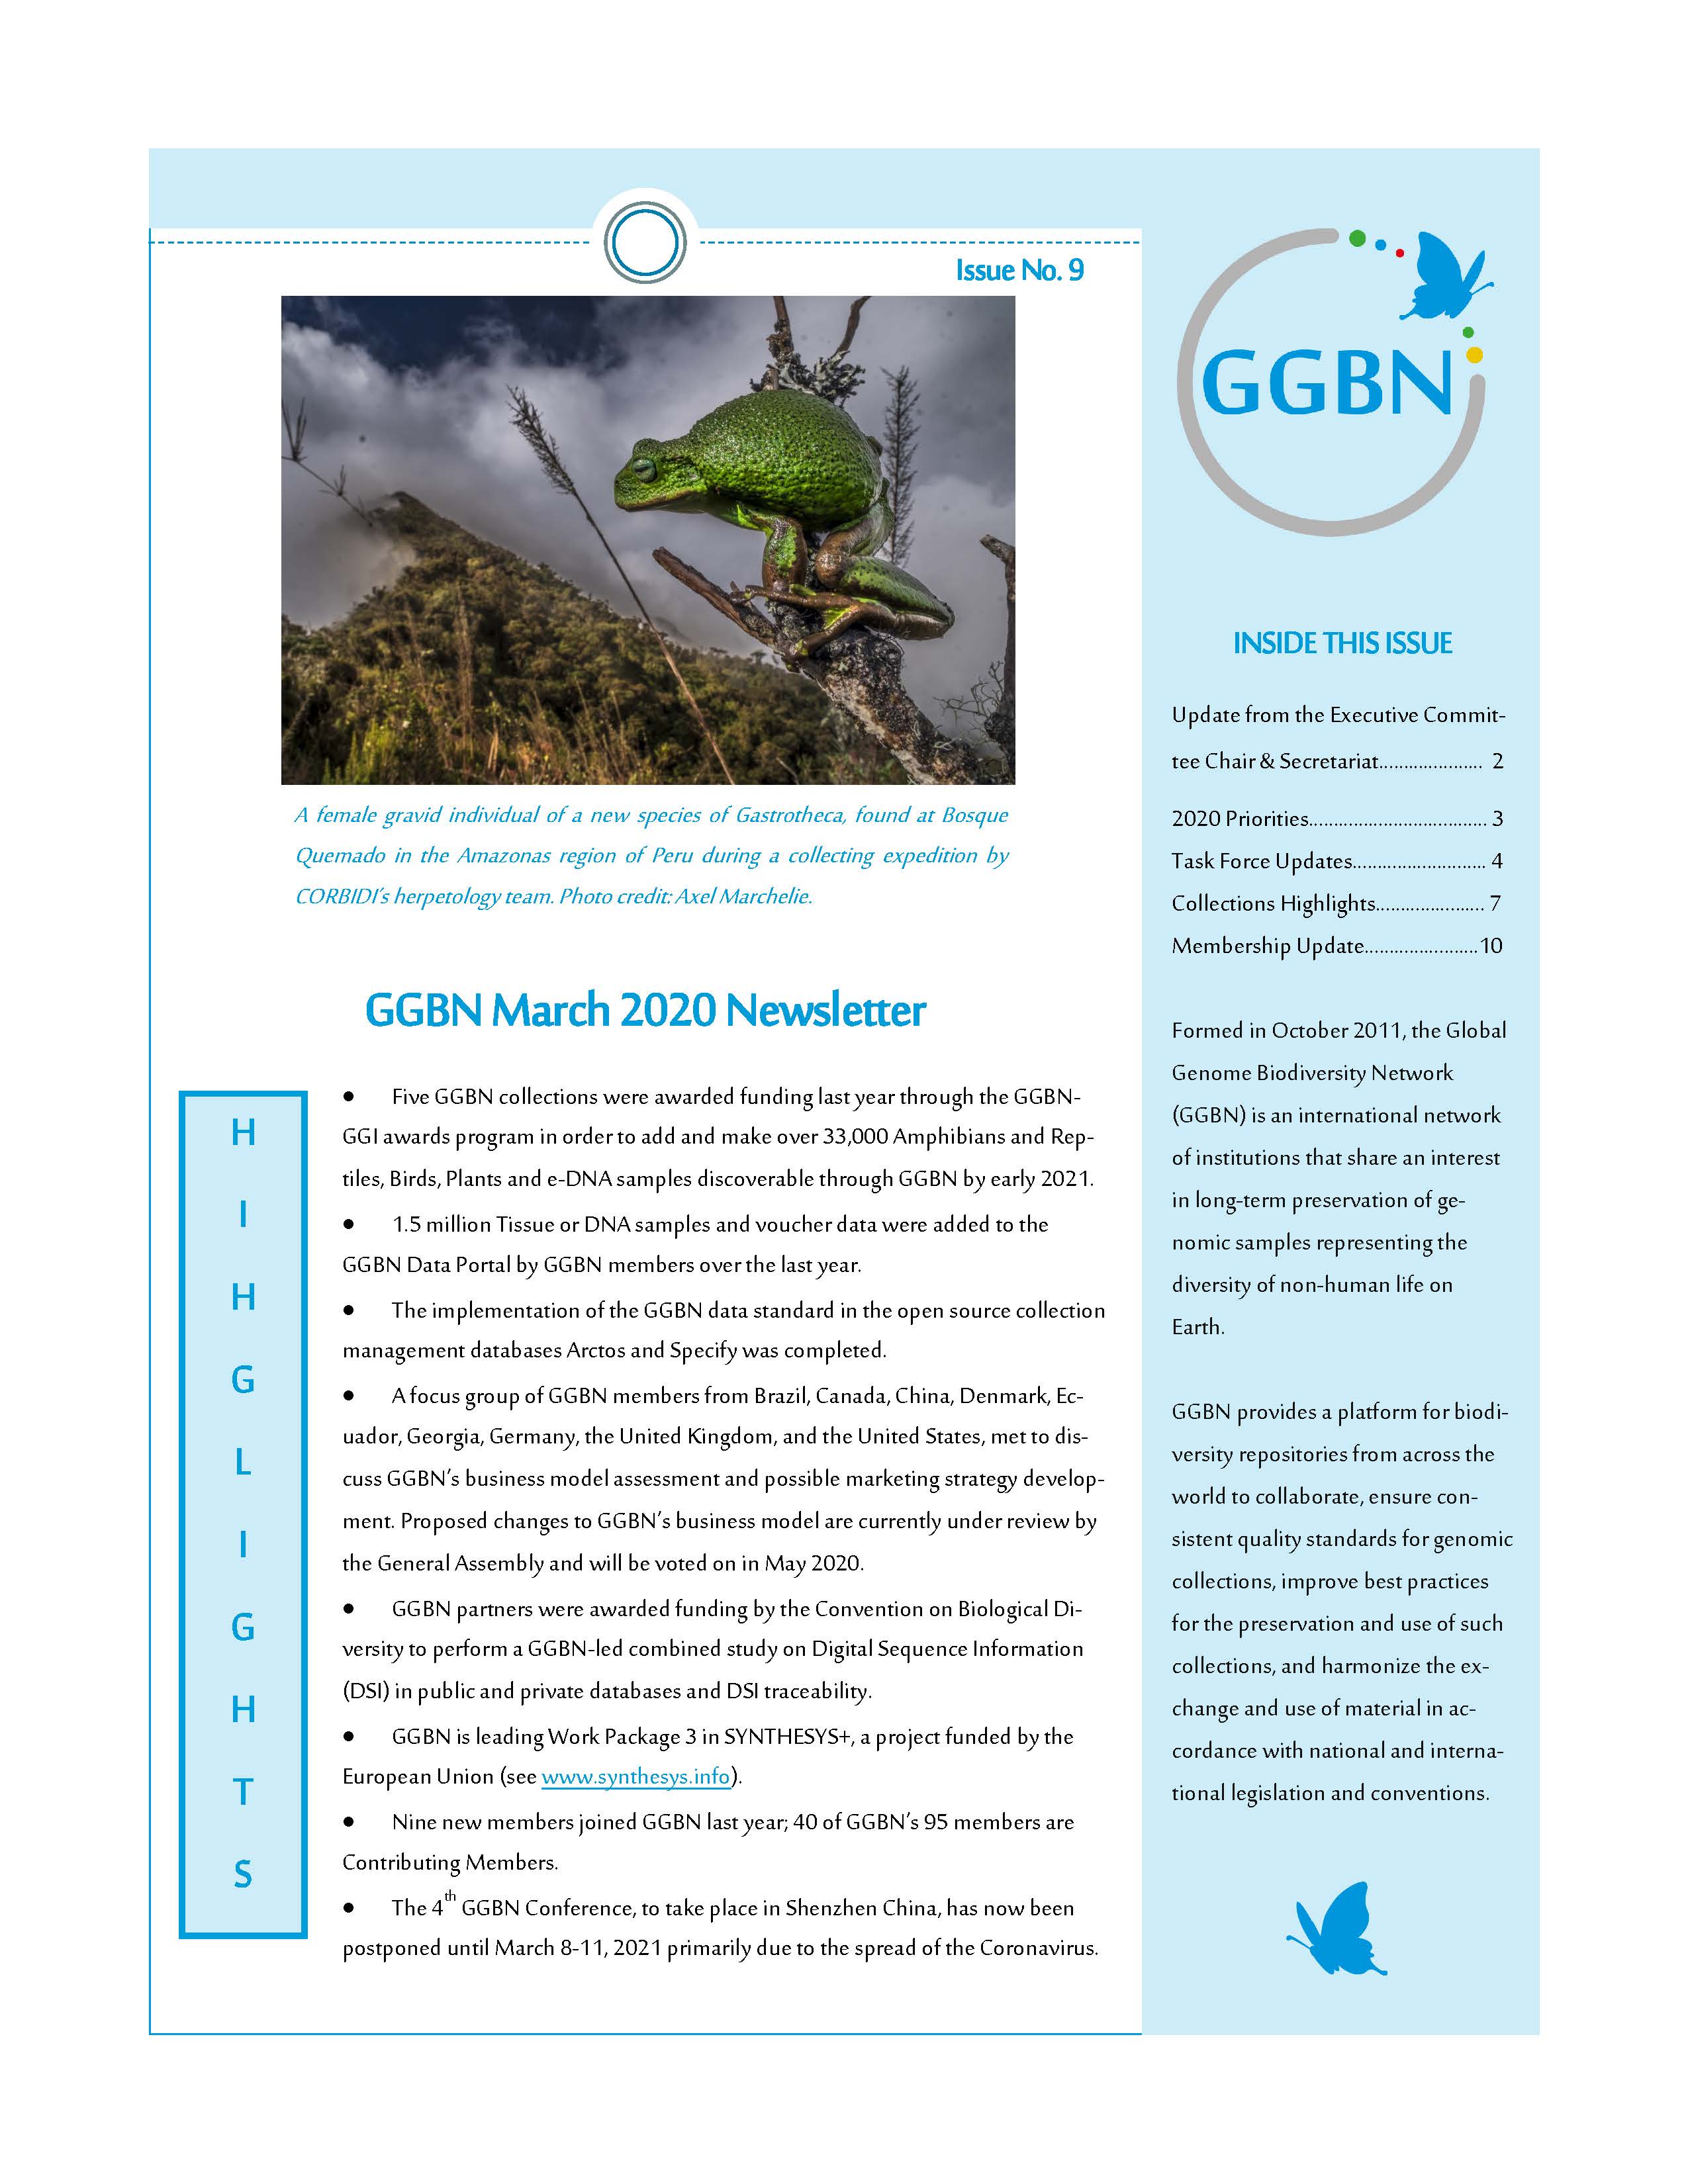 GGBN2020Newsletter.jpg